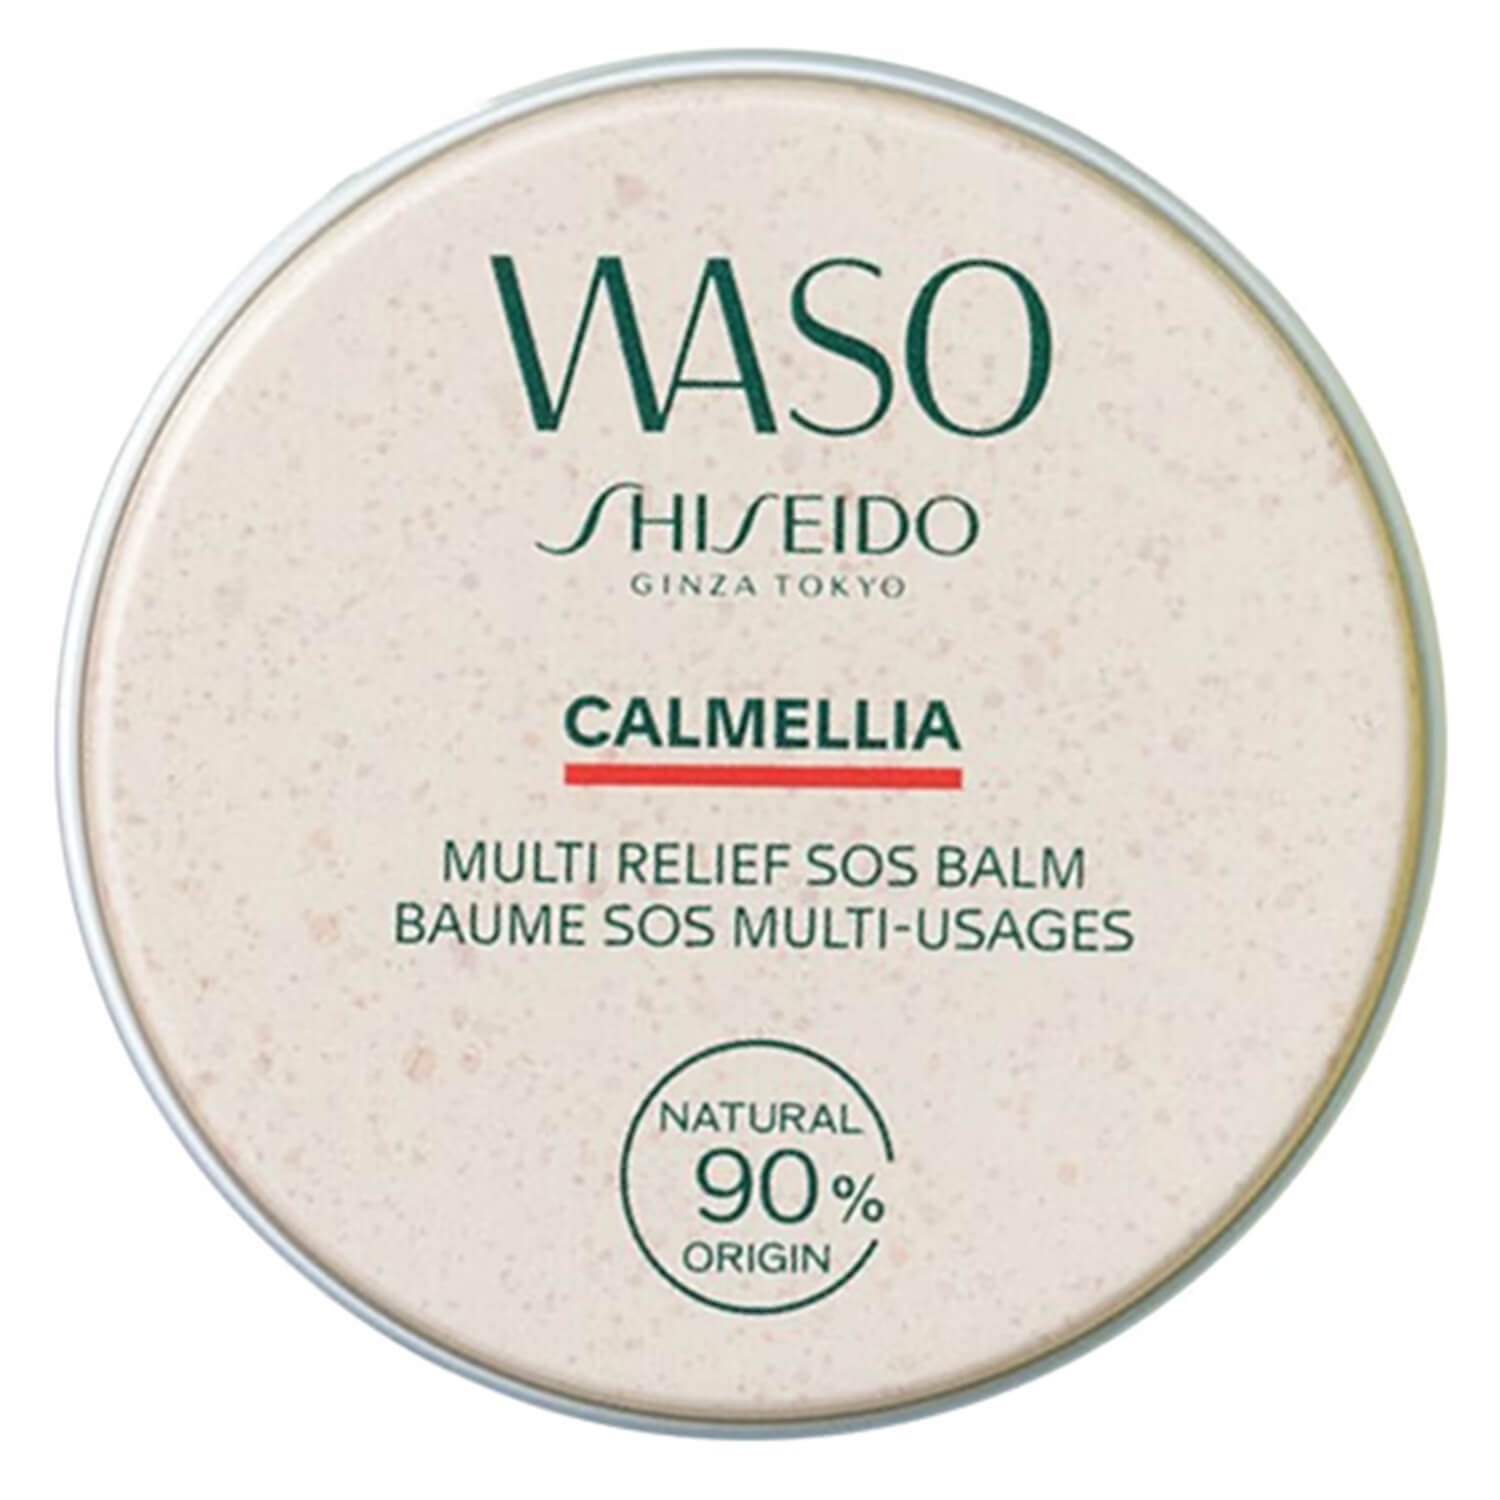 Product image from Waso - CALMELLIA Multi-Relief SOS Balm